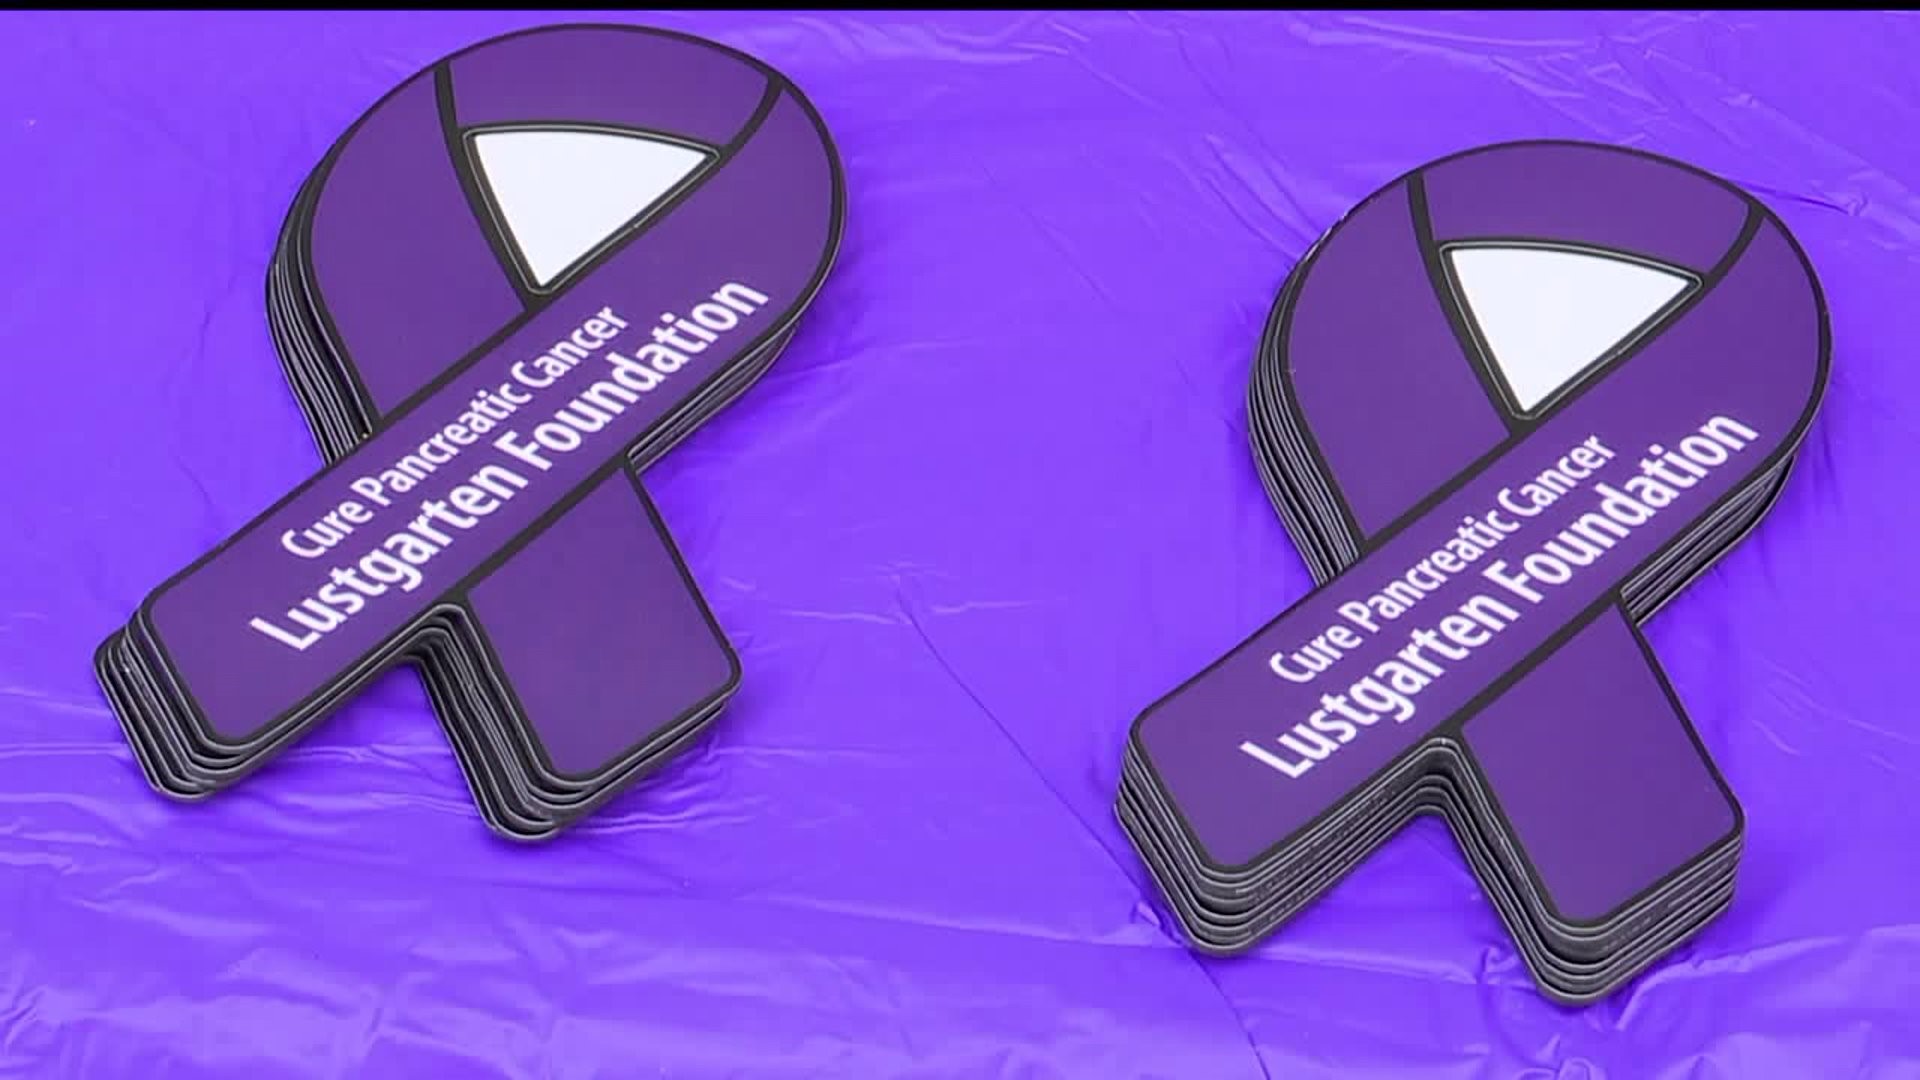 2nd annual Lustgarten walk for pancreatic cancer